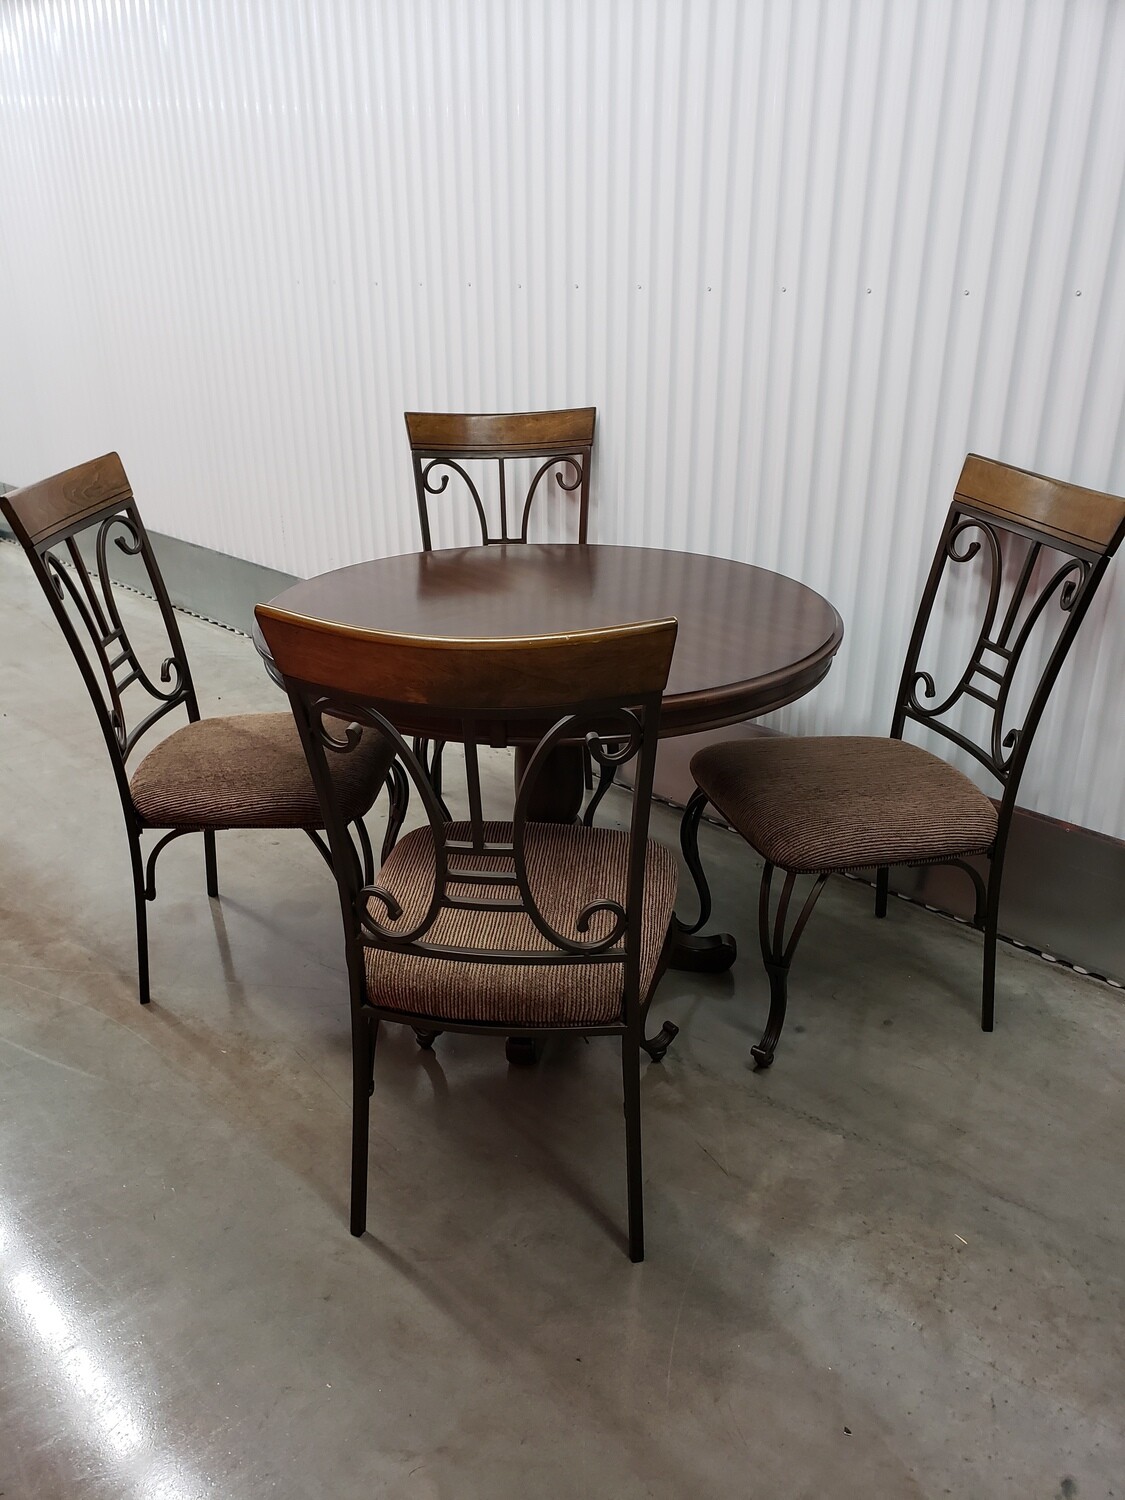 Kitchen Pedestal Table w/ wrought iron chairs #2324